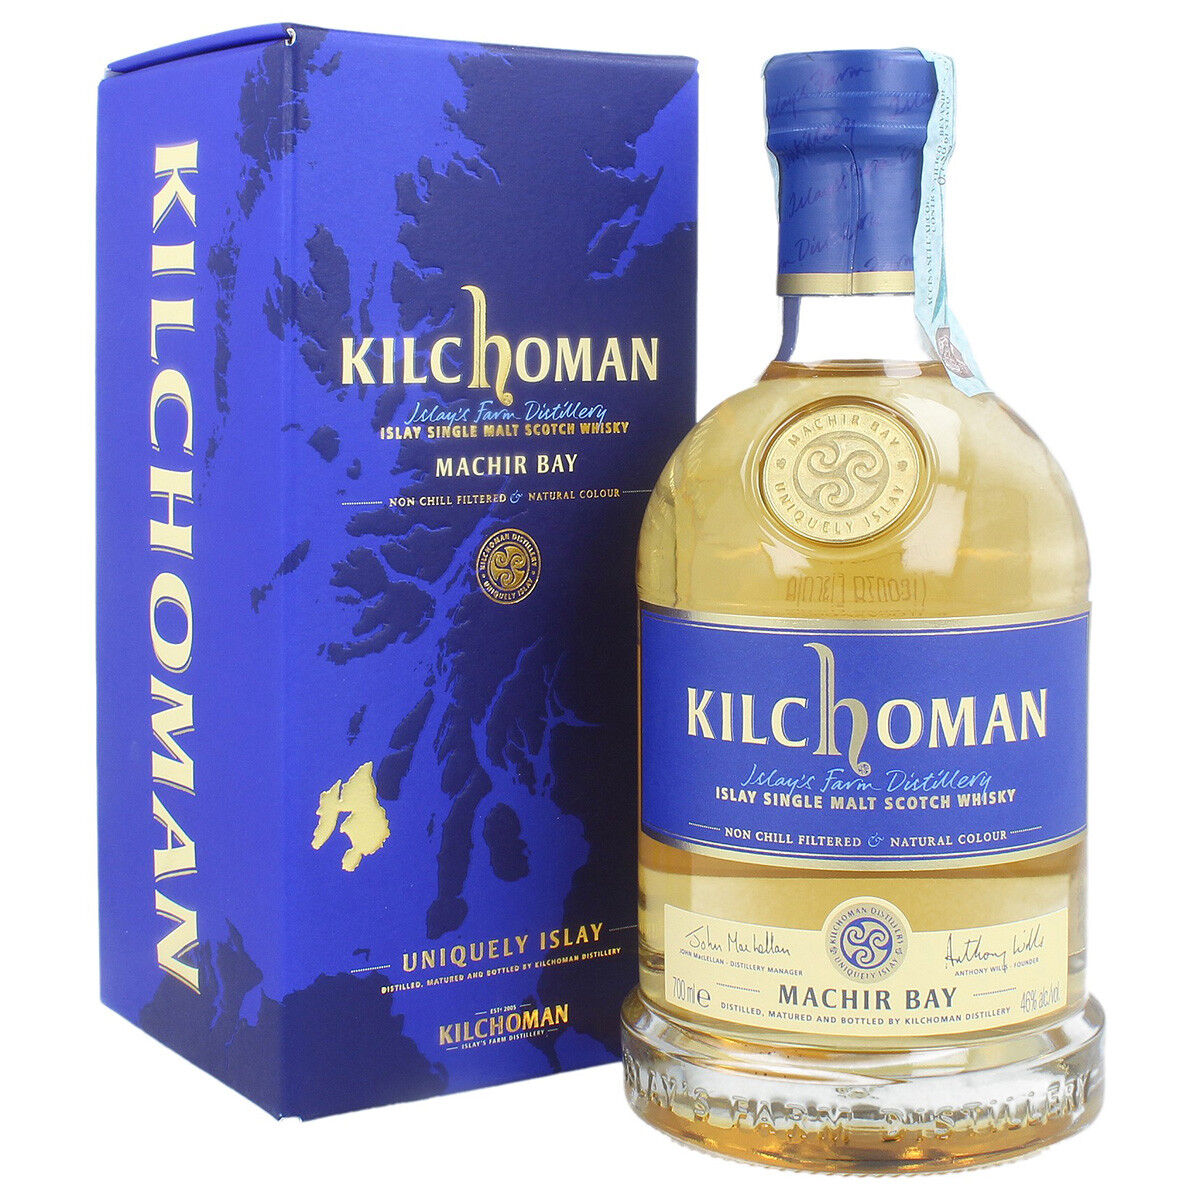 Laciviltadelbere Whisky Islay Single Malt Scotch "Machir Bay" Kilchoman